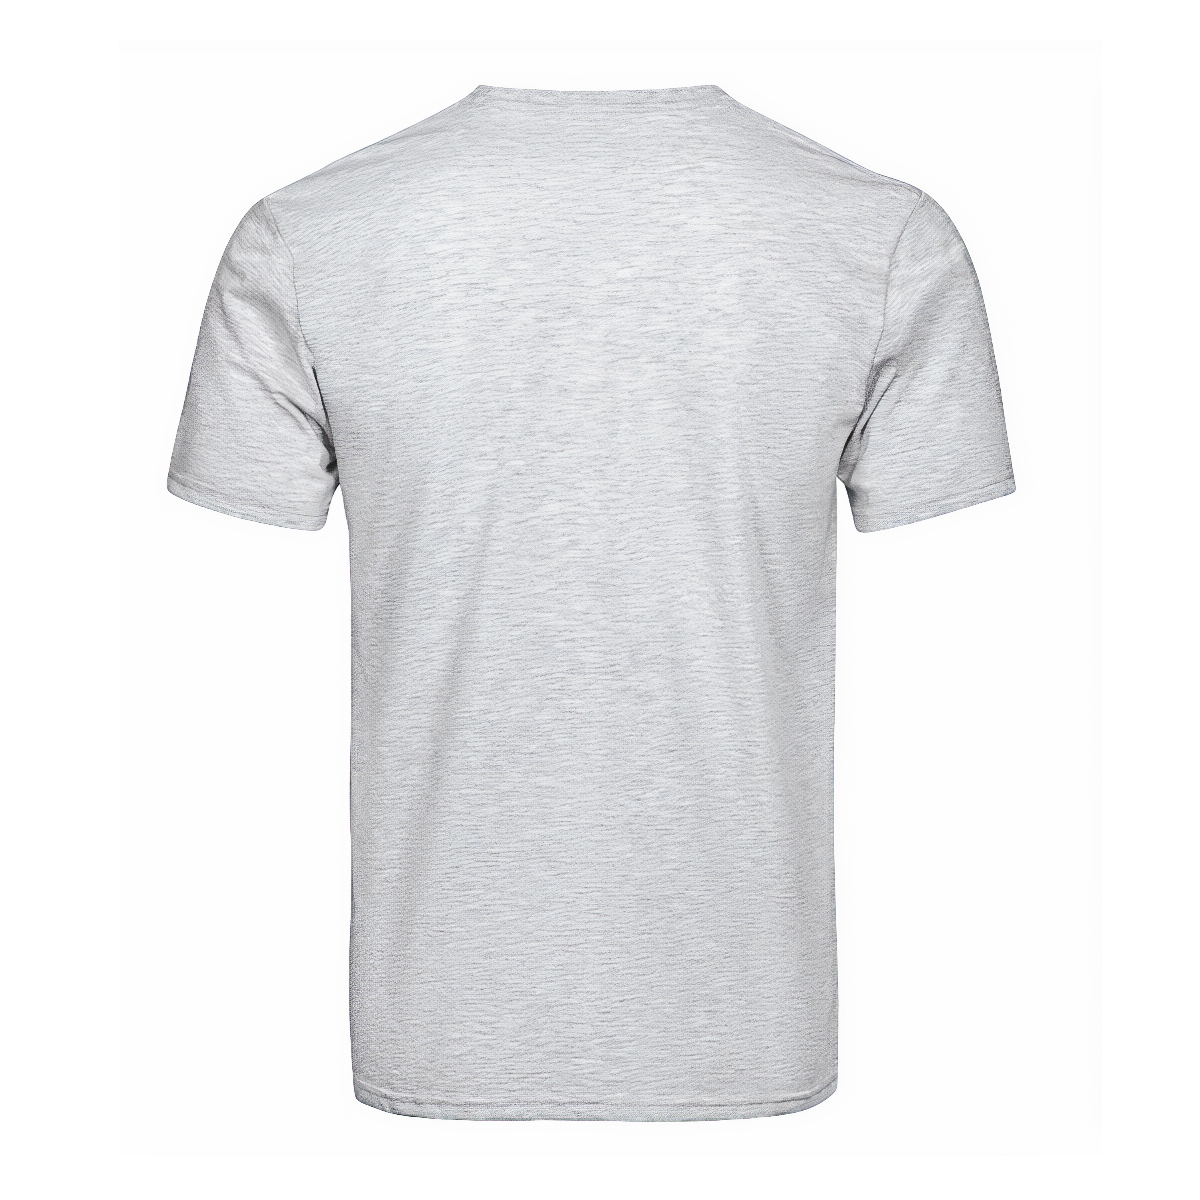 Innes Tartan Crest T-shirt - I'm not yelling style